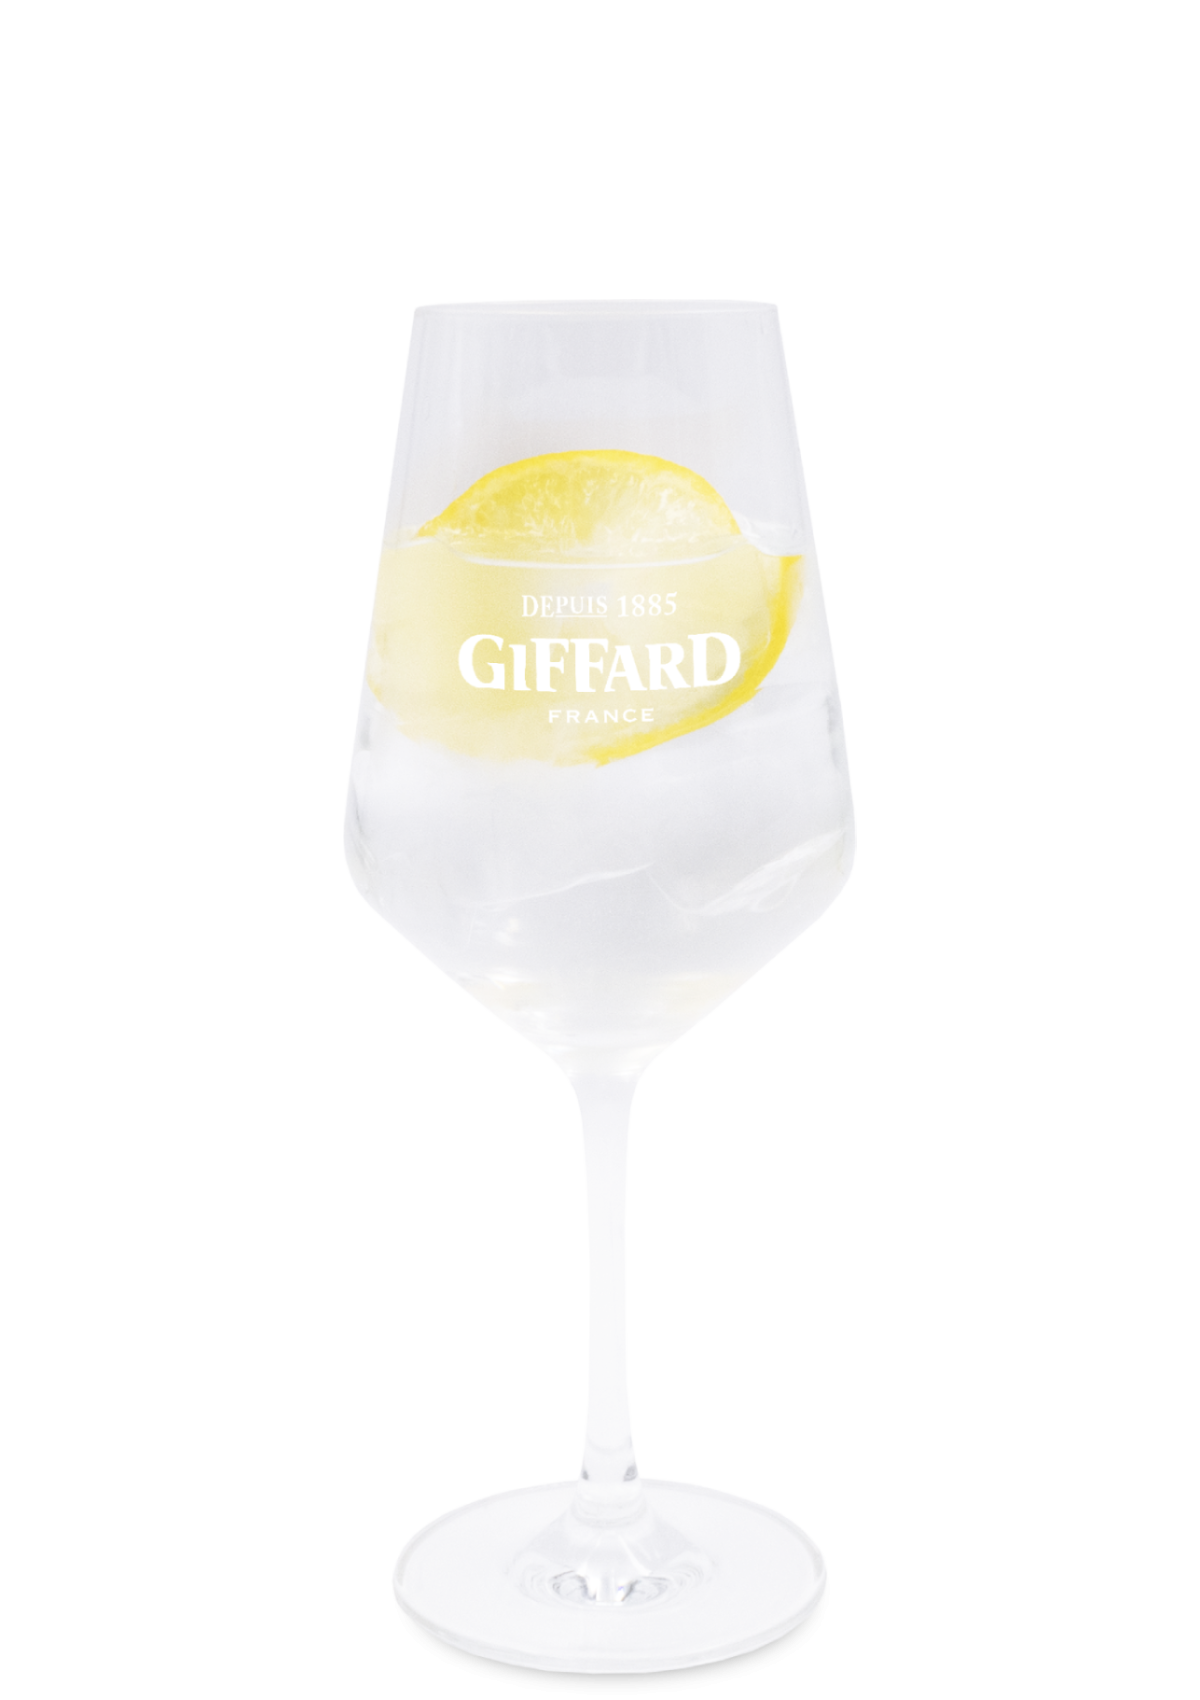 Giffard menthe Pastille Liquor – Wine Therapy NYC